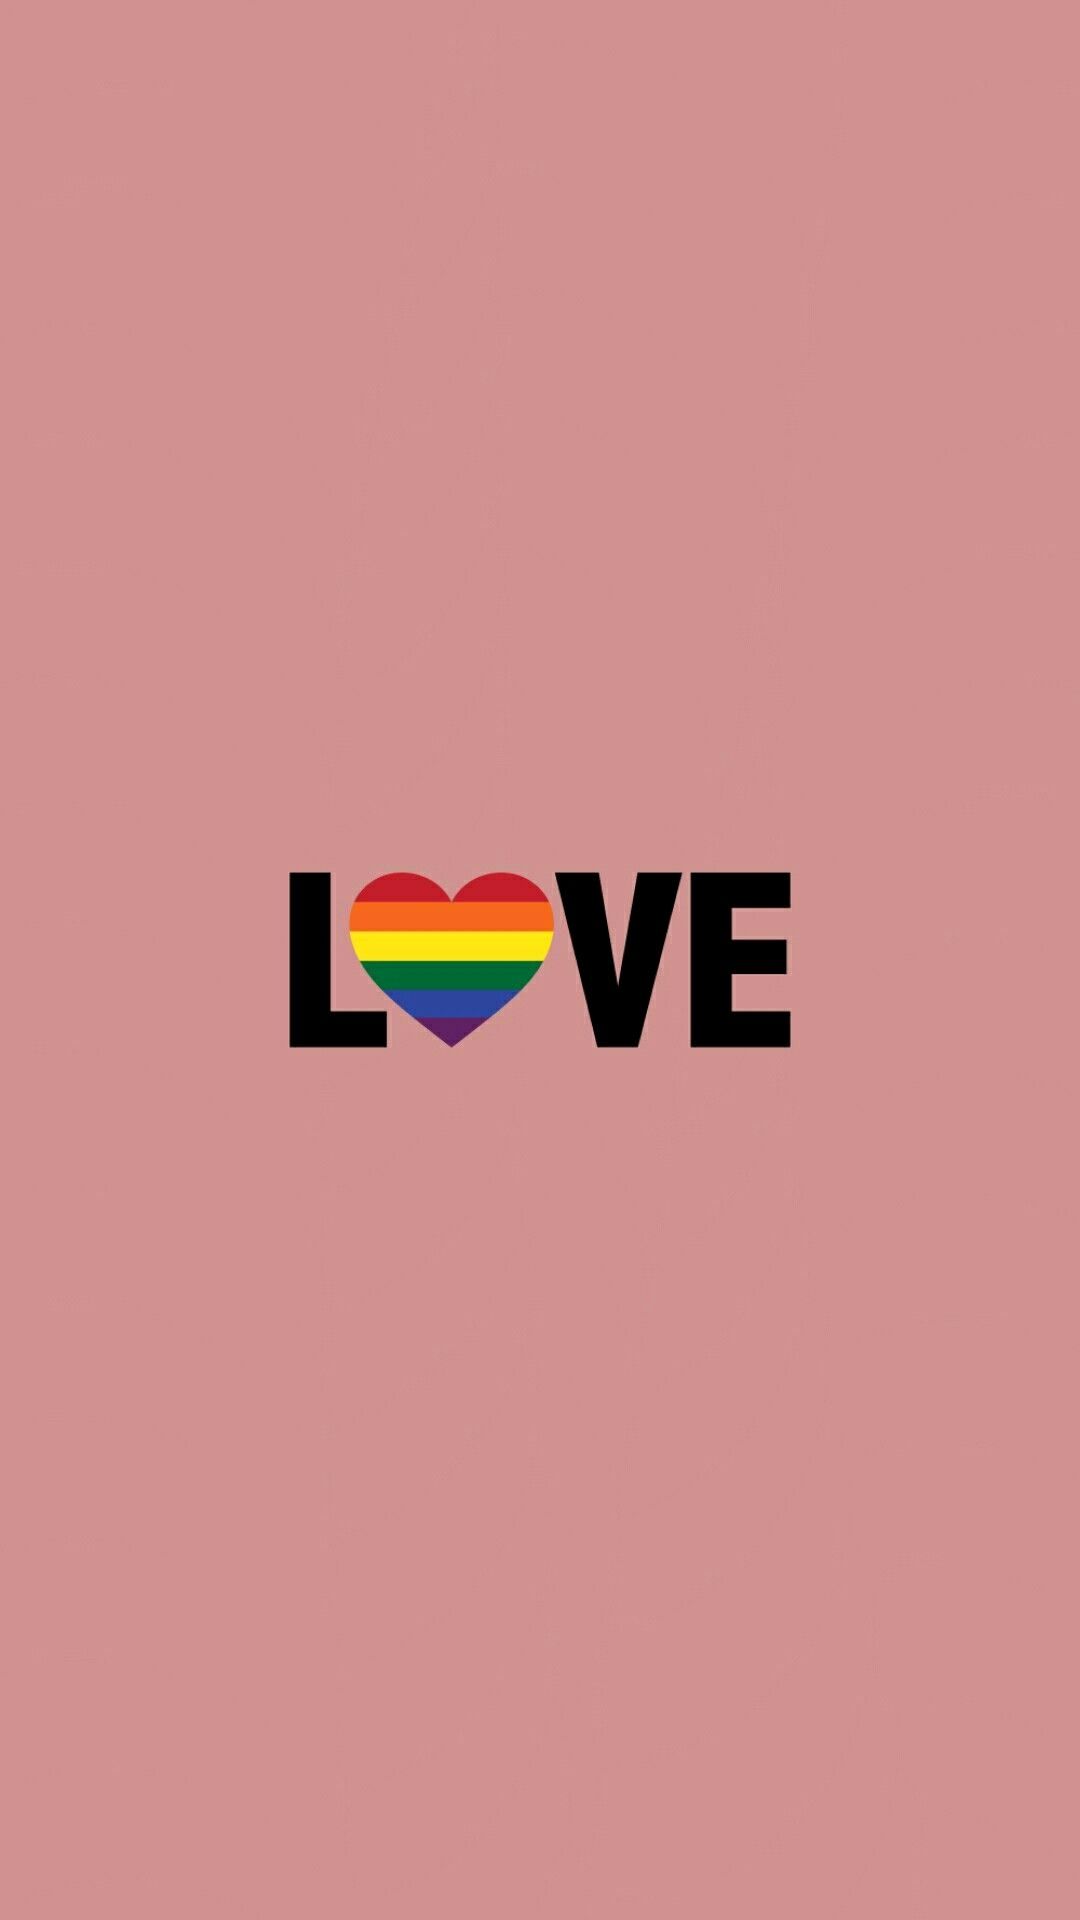 Trans Flag Wallpaper Best Of Pride Lgbt Lesbian Bi Trans Love is Love is Love iPhone Wallpaper Lockscreen for You of The Hudson